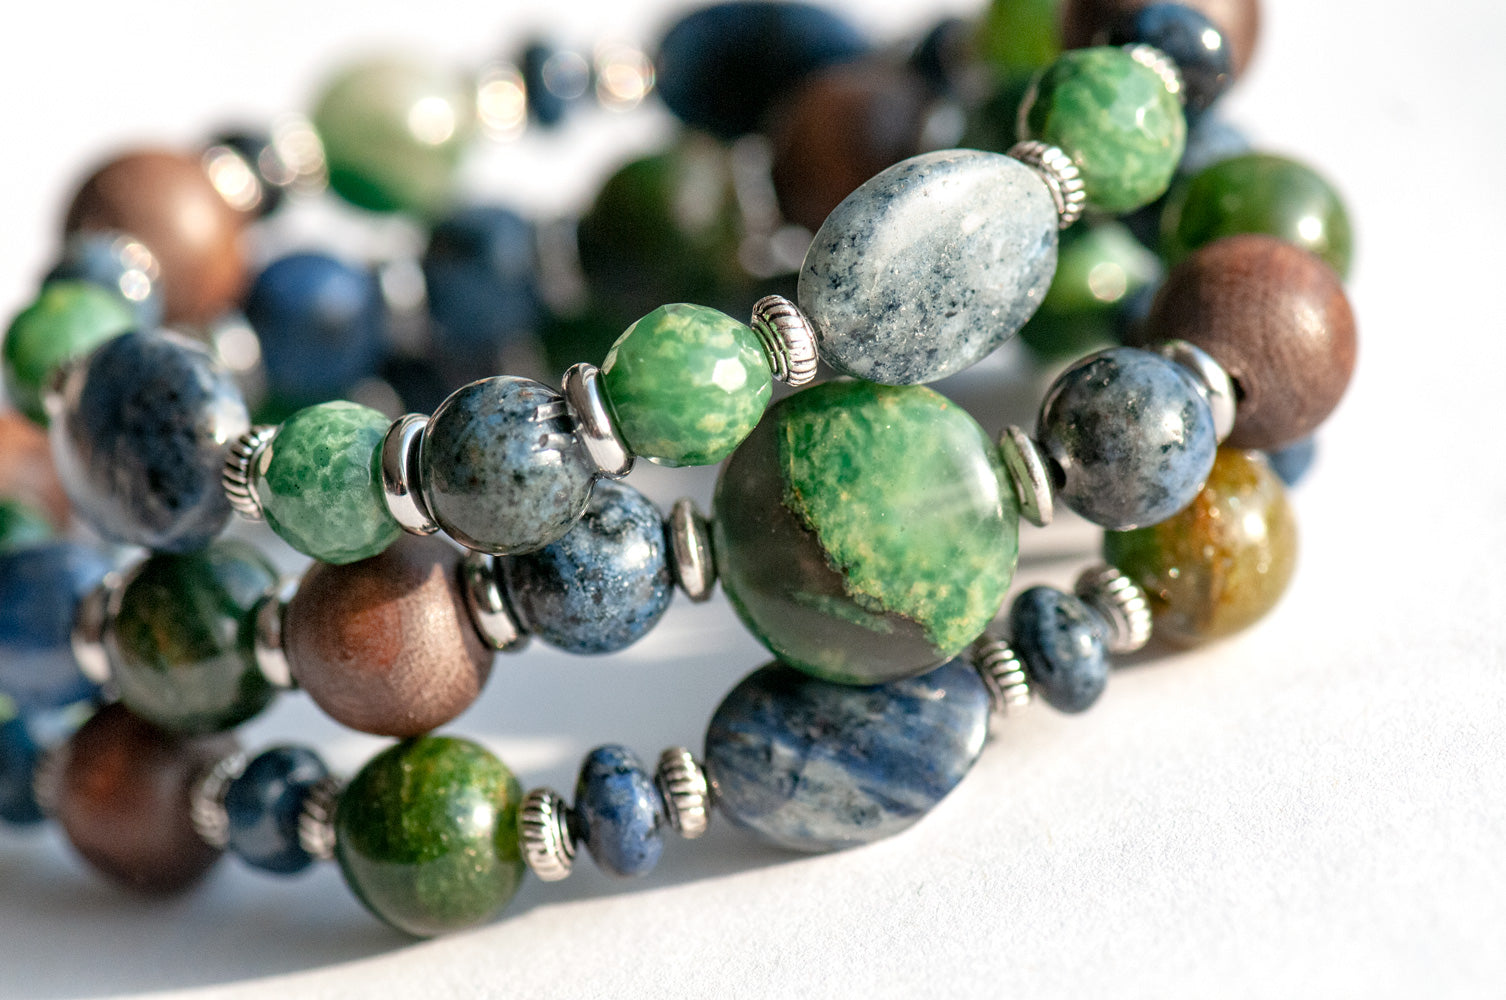 Sustainable Lynx gemstone bracelet set handmade in New Brunswick from ethically sourced gemstones